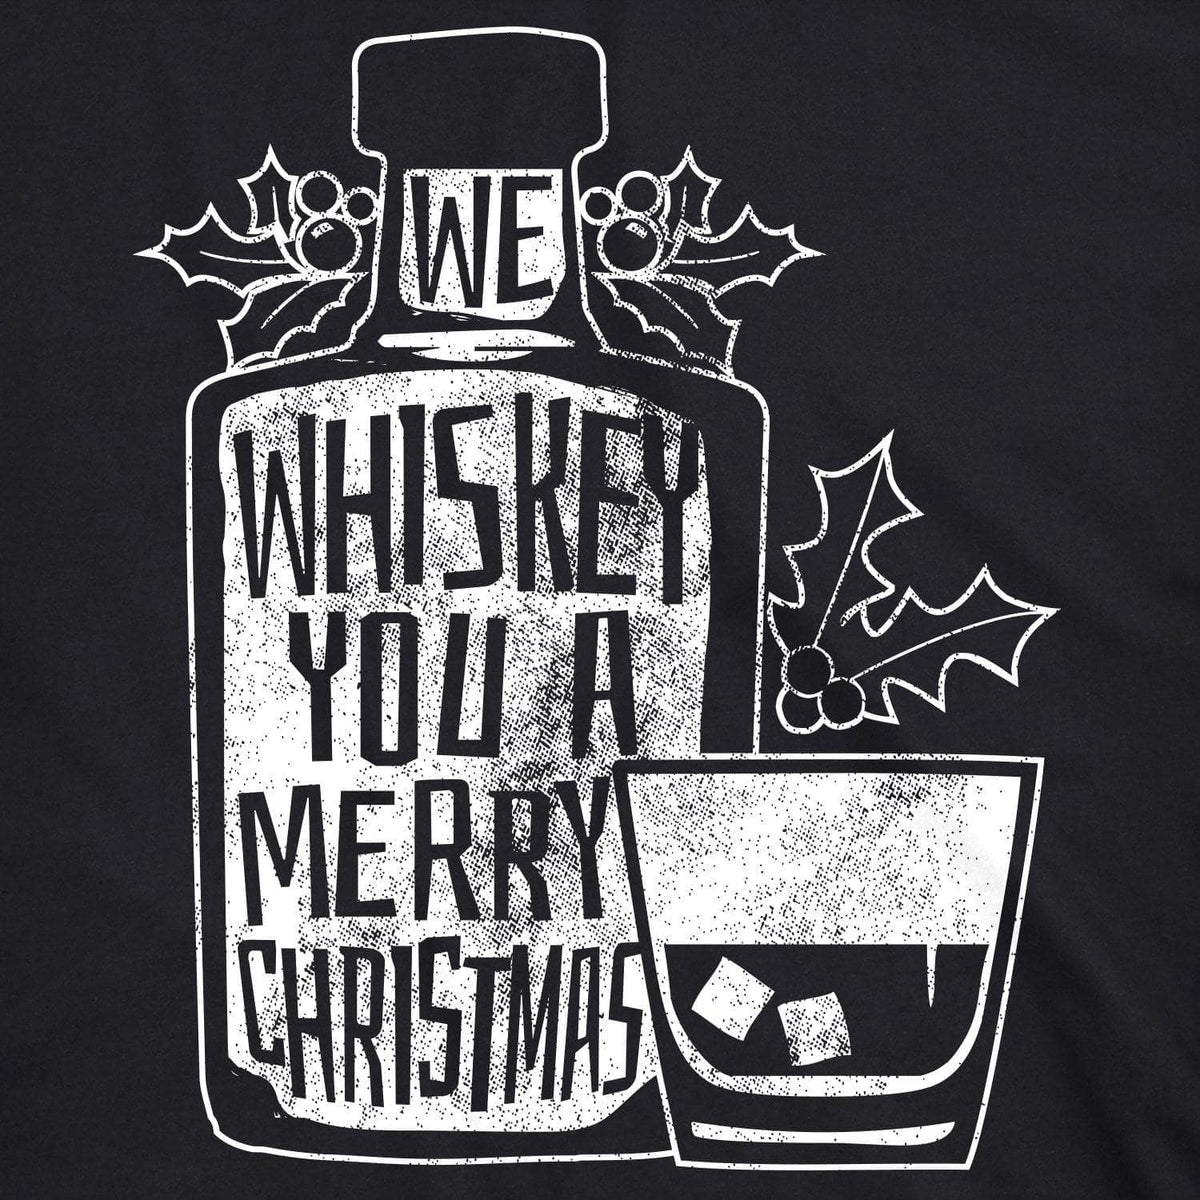 We Whiskey You A Merry Christmas Men&#39;s Tshirt - Crazy Dog T-Shirts